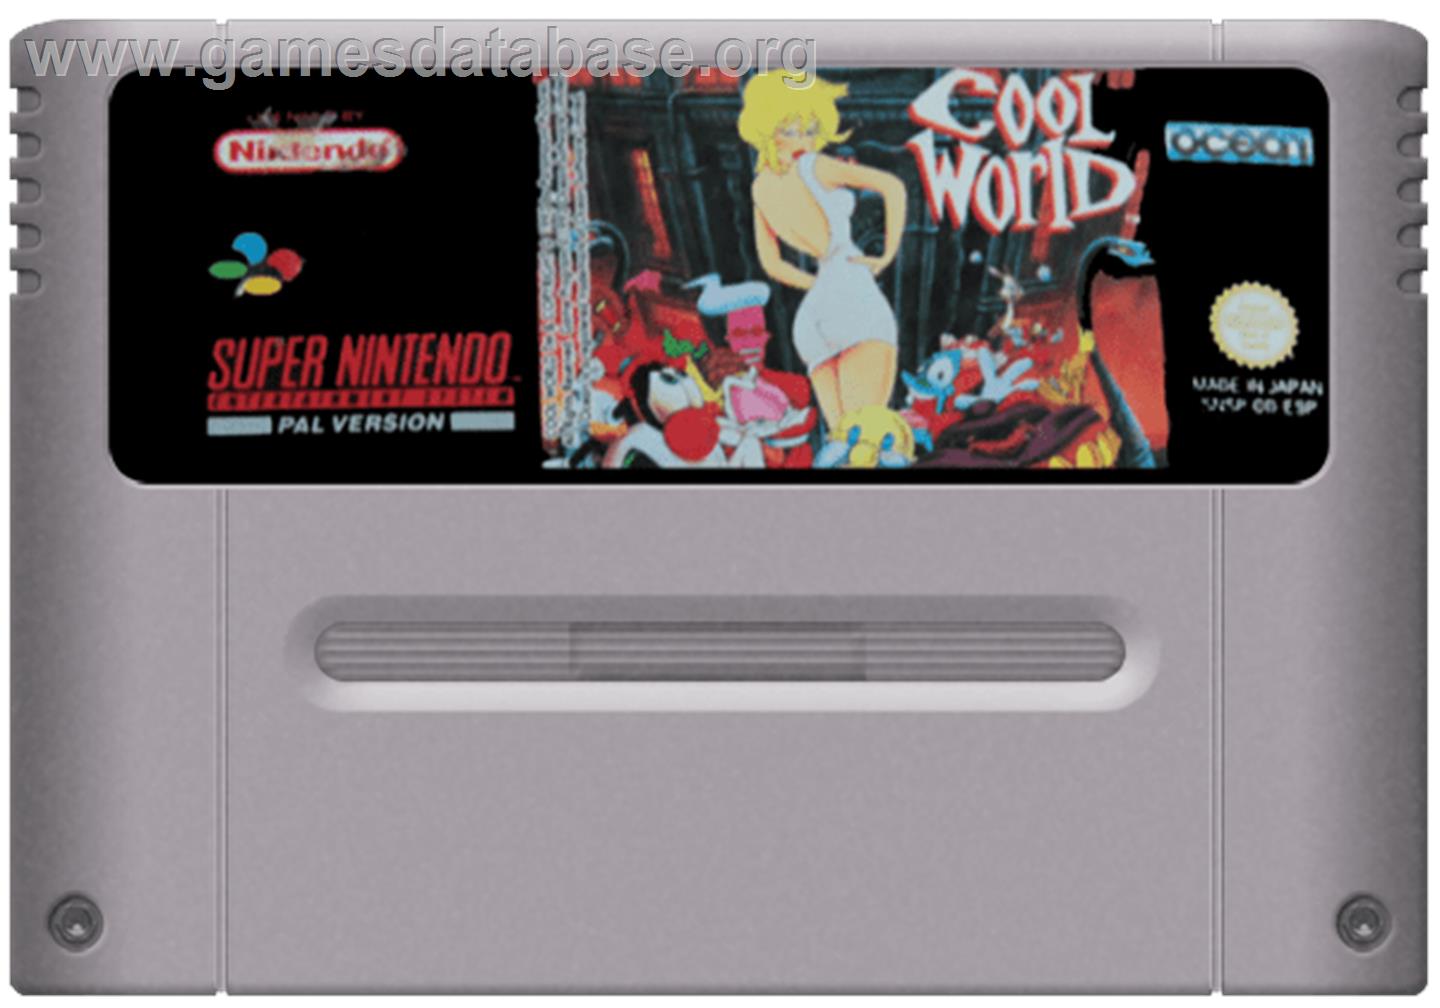 Cool World - Nintendo SNES - Artwork - Cartridge